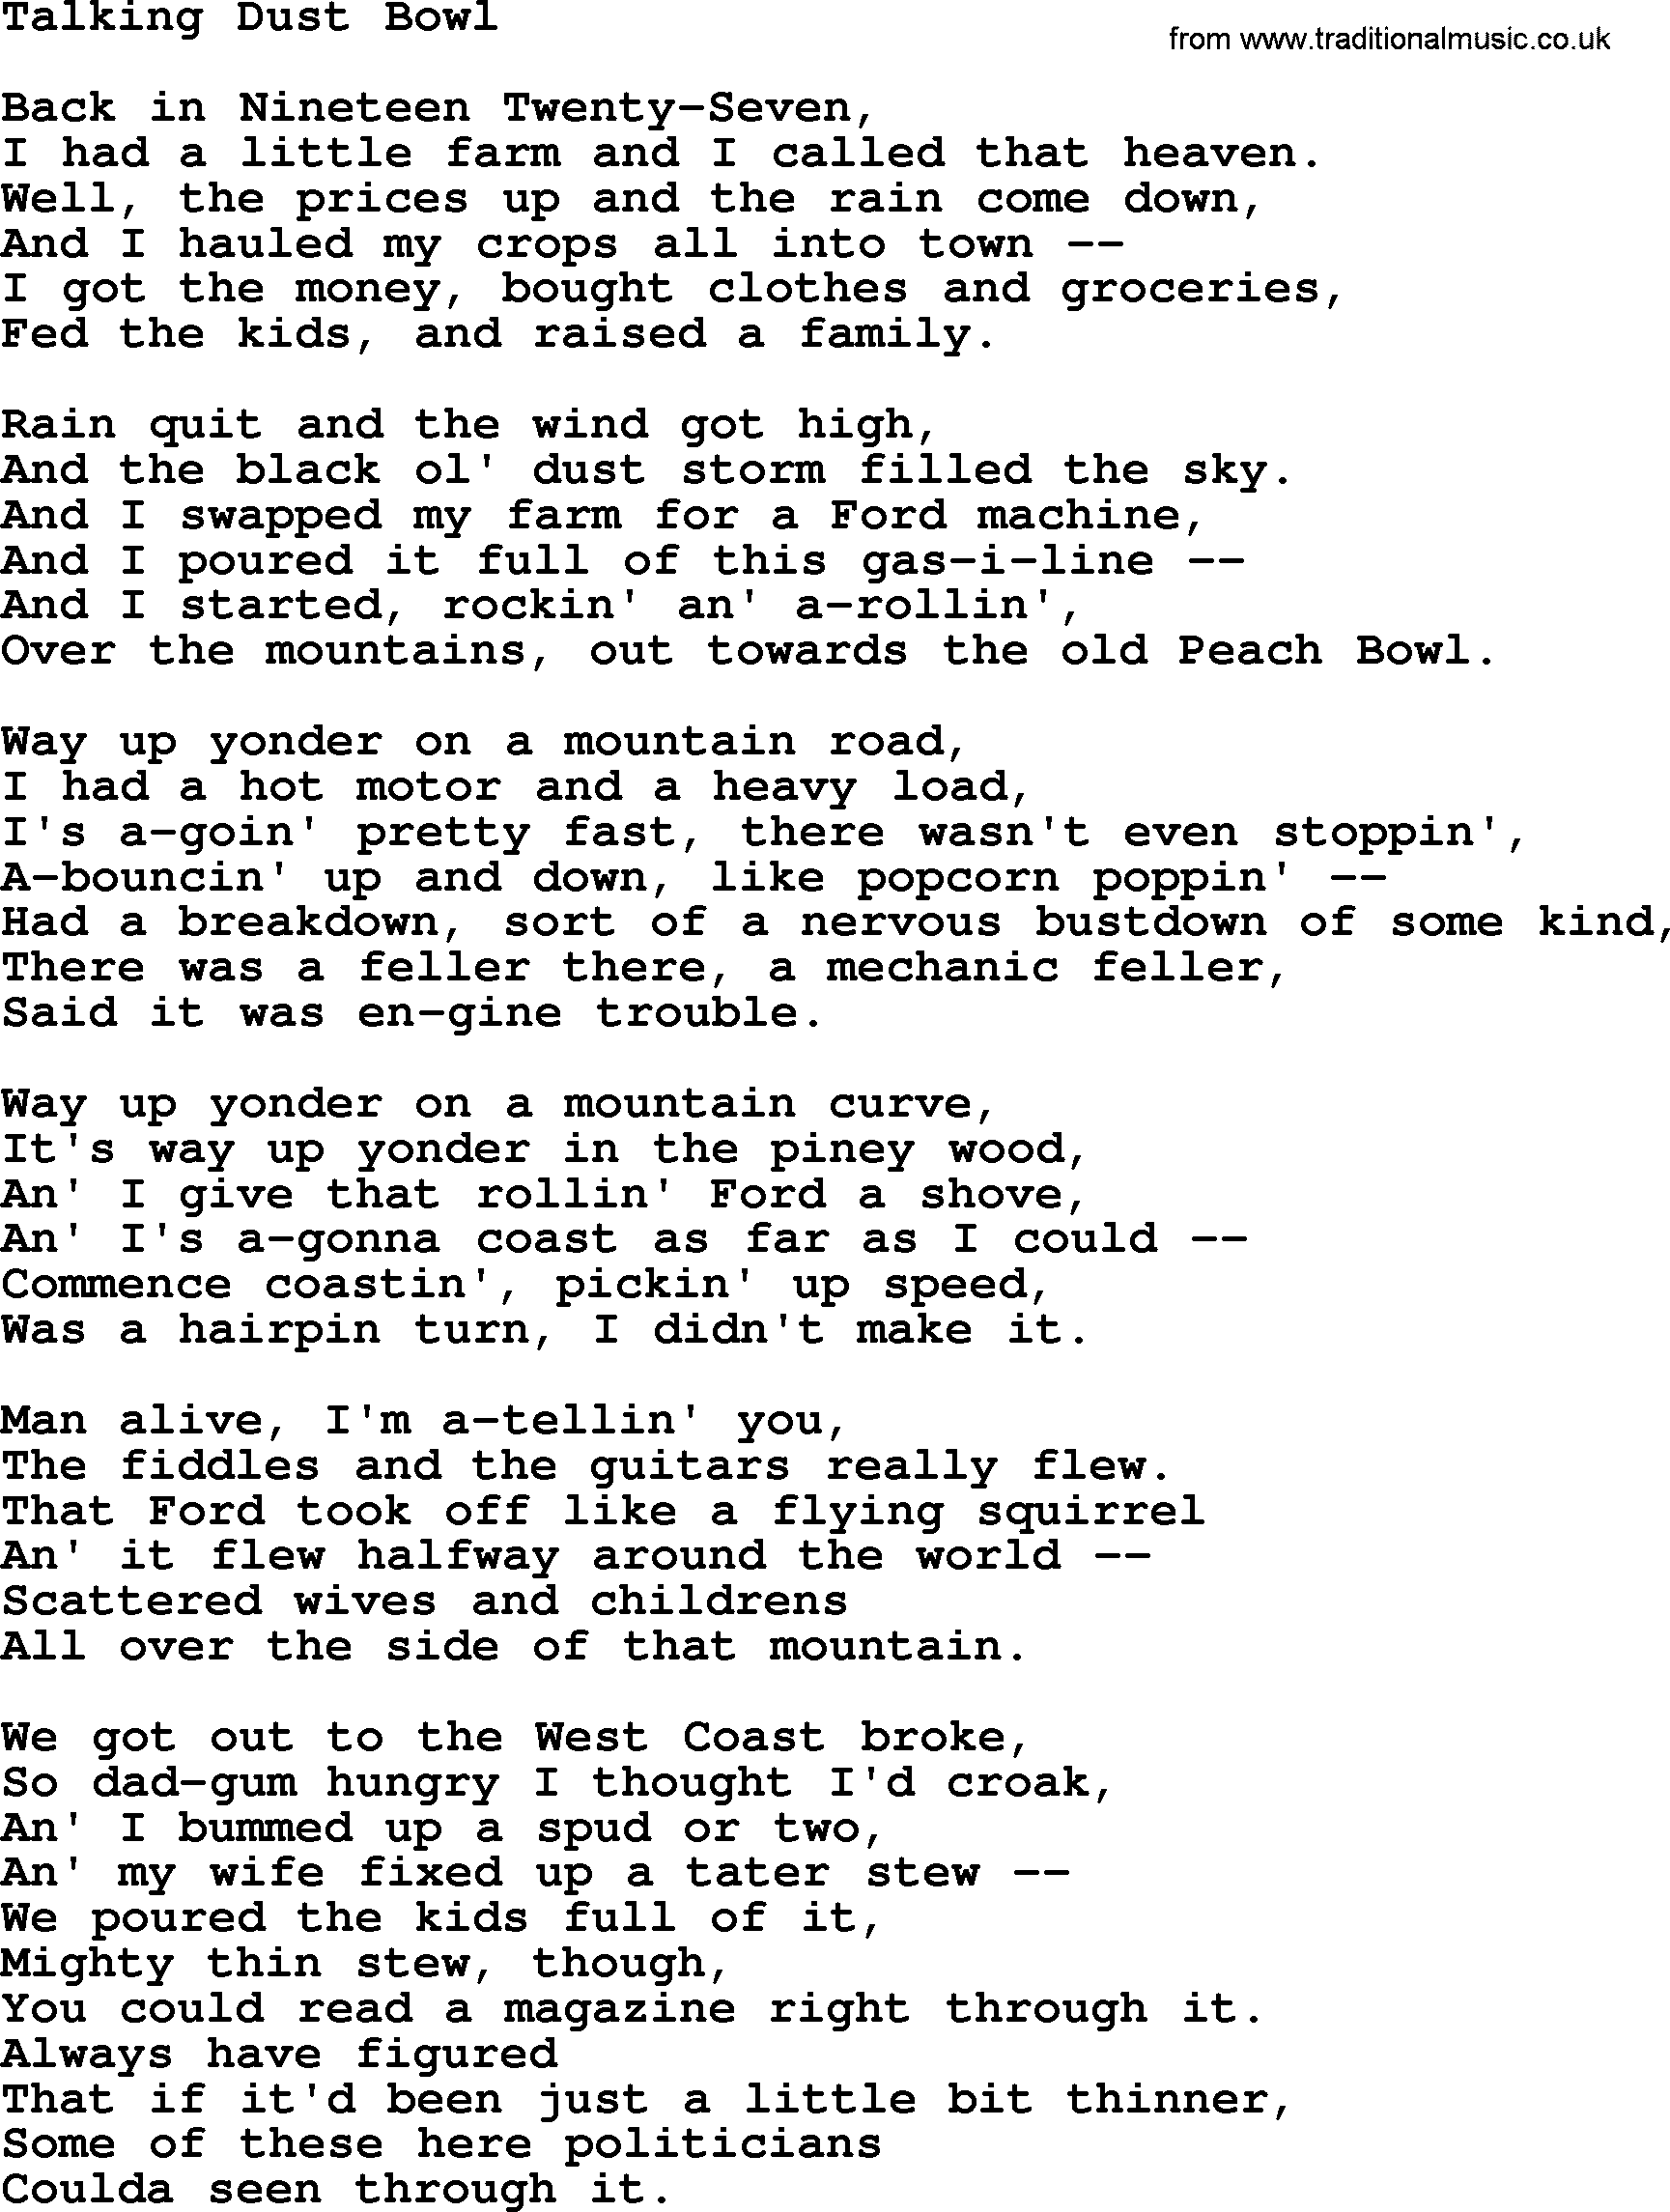 Woody Guthrie song Talking Dust Bowl lyrics